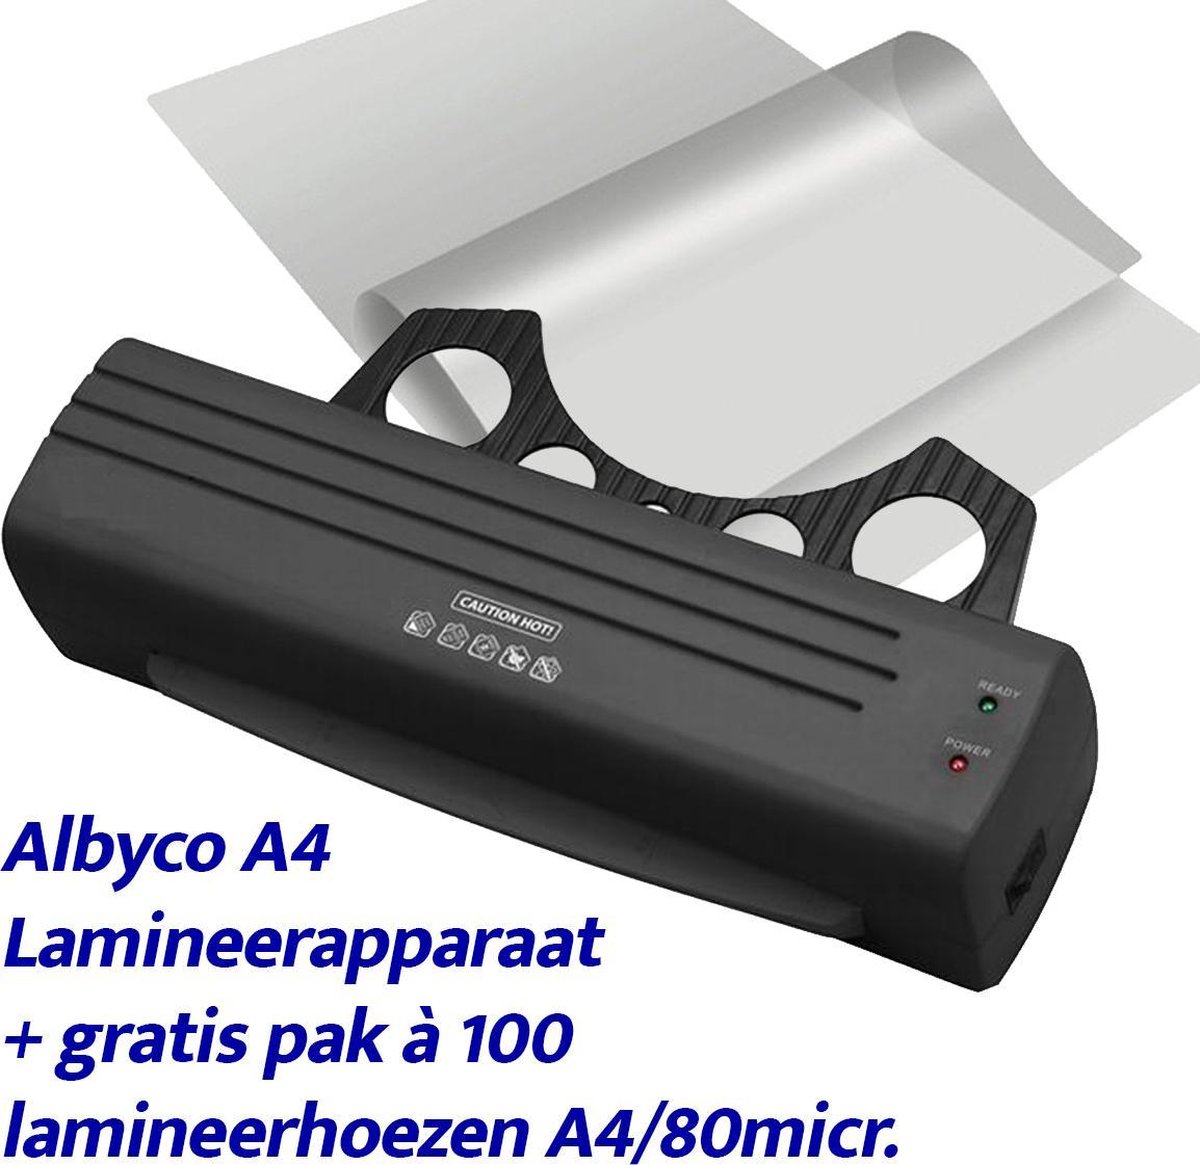 pijp Garderobe Zakenman Albyco Lamineerapparaat A4 met gratis pak lamineerhoezen A4/80 micron |  bol.com